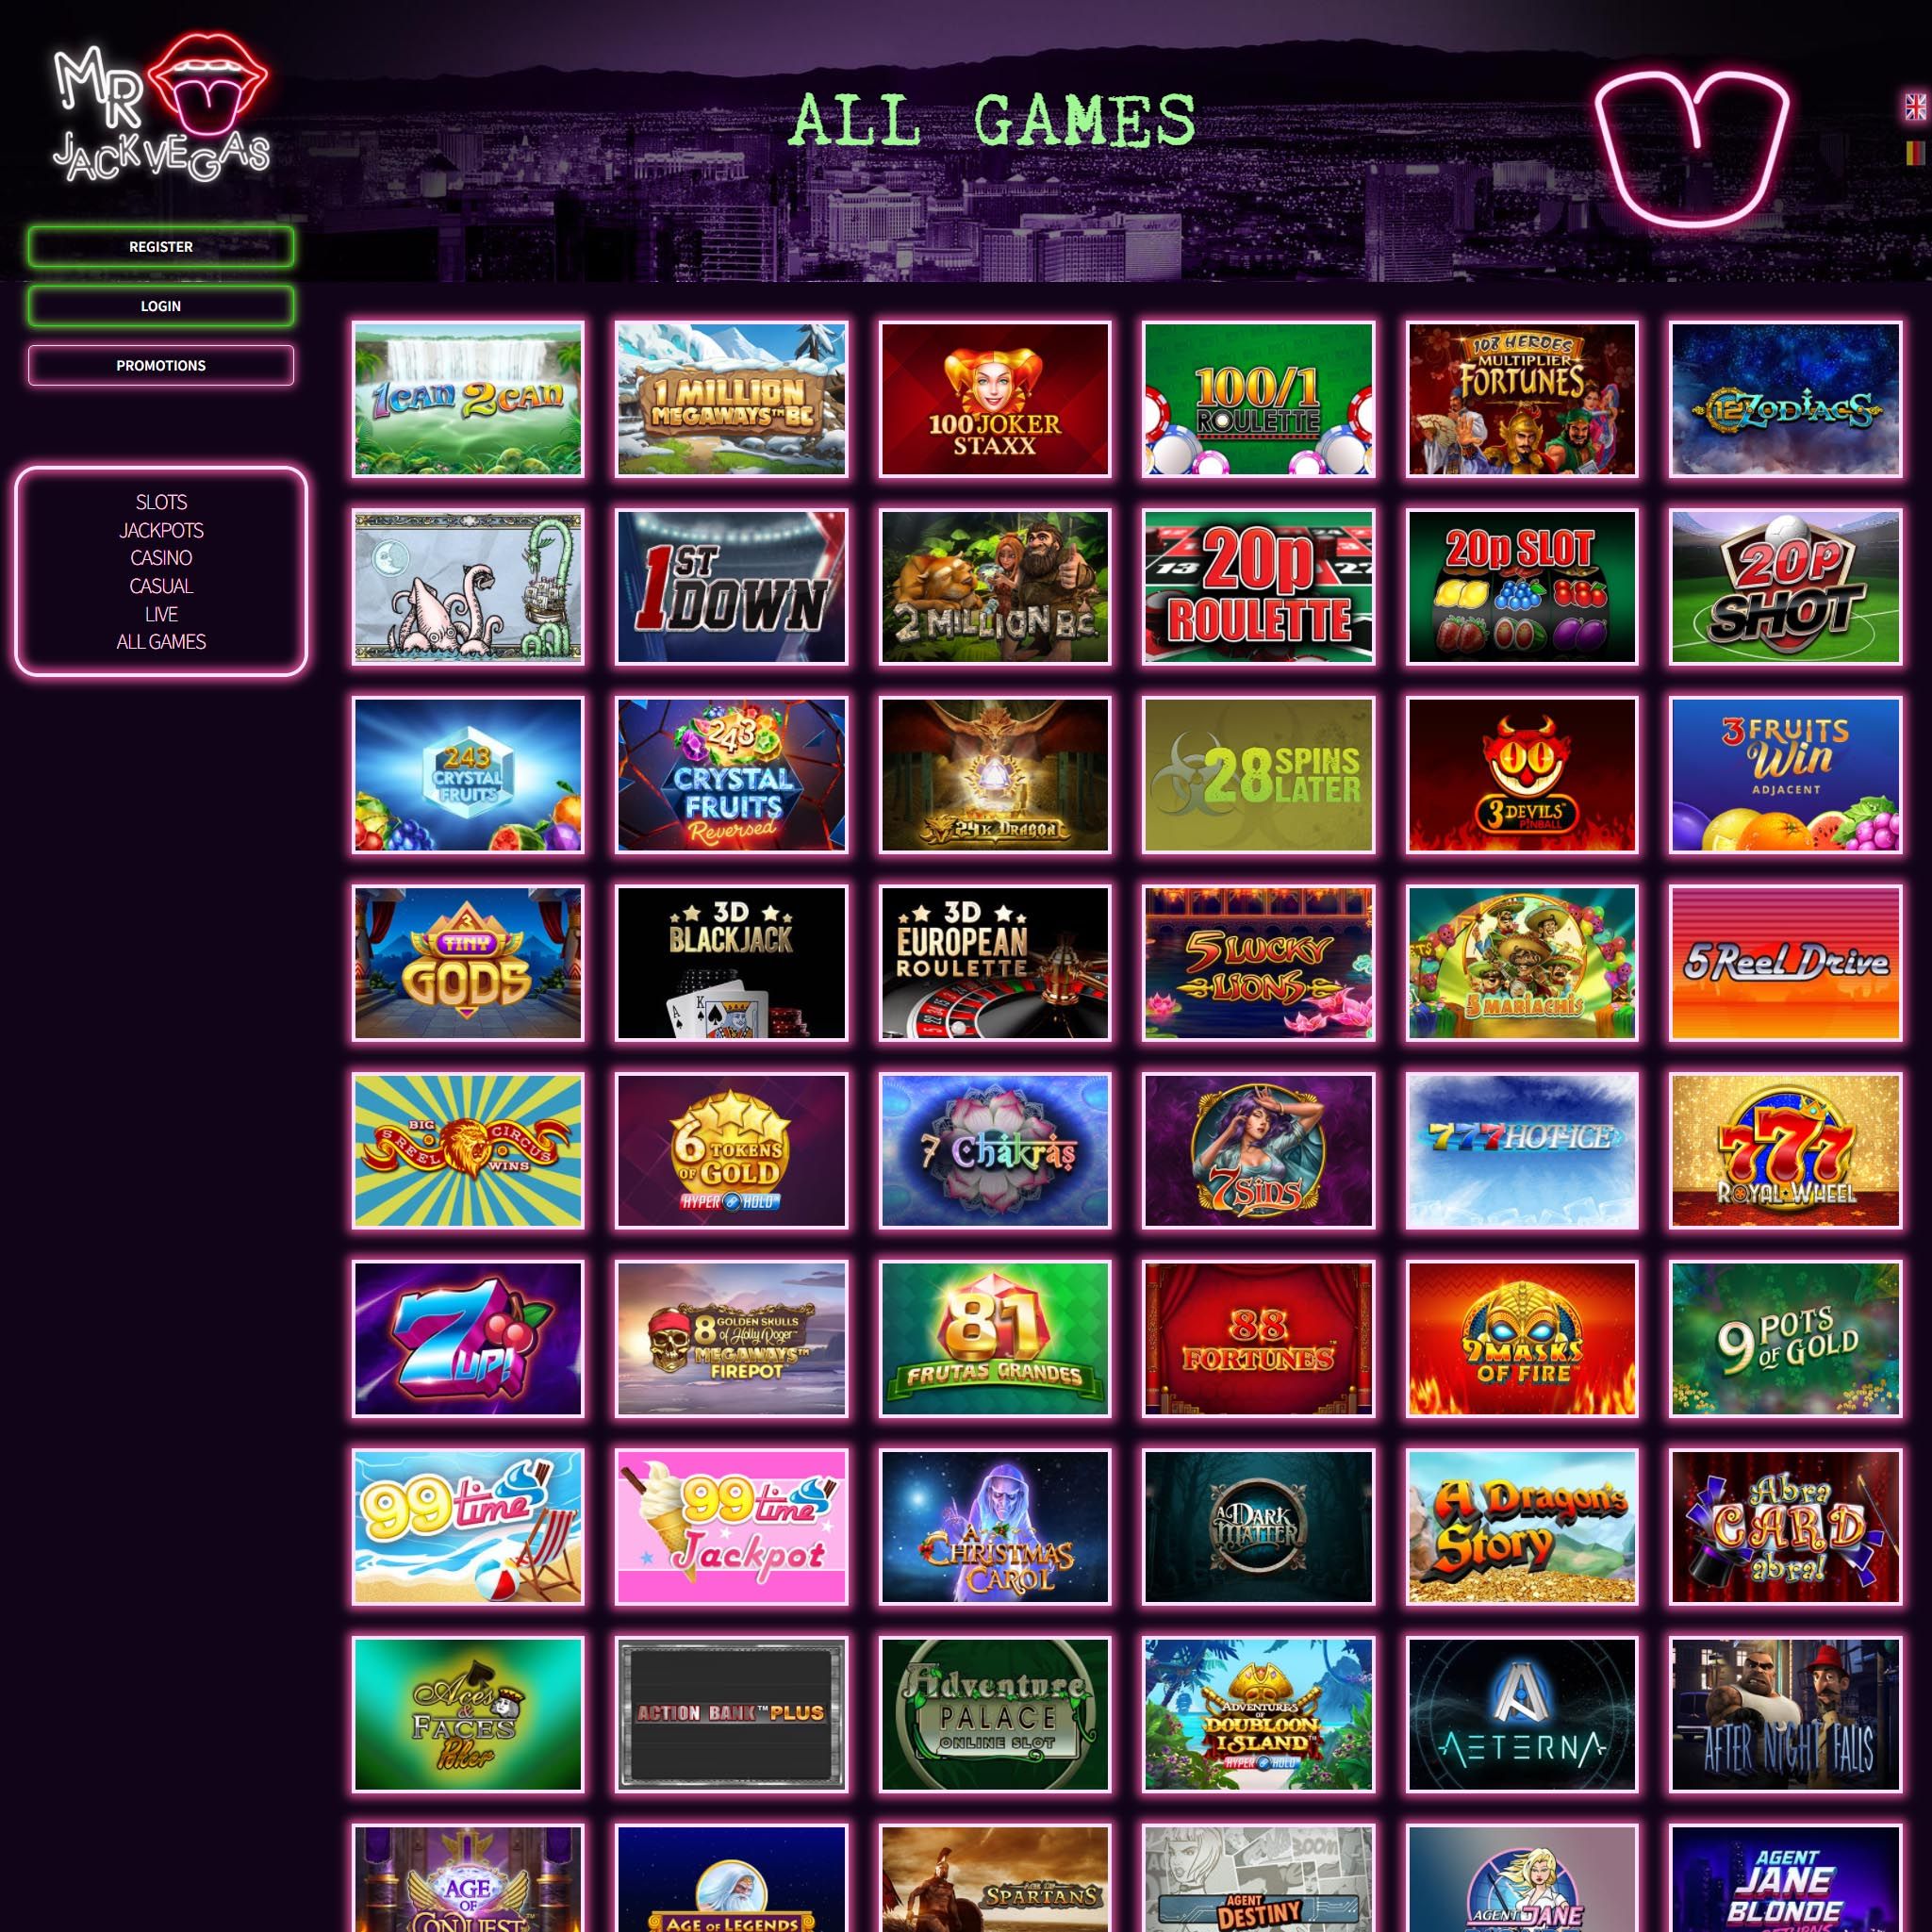 Mr Jack Vegas full games catalogue